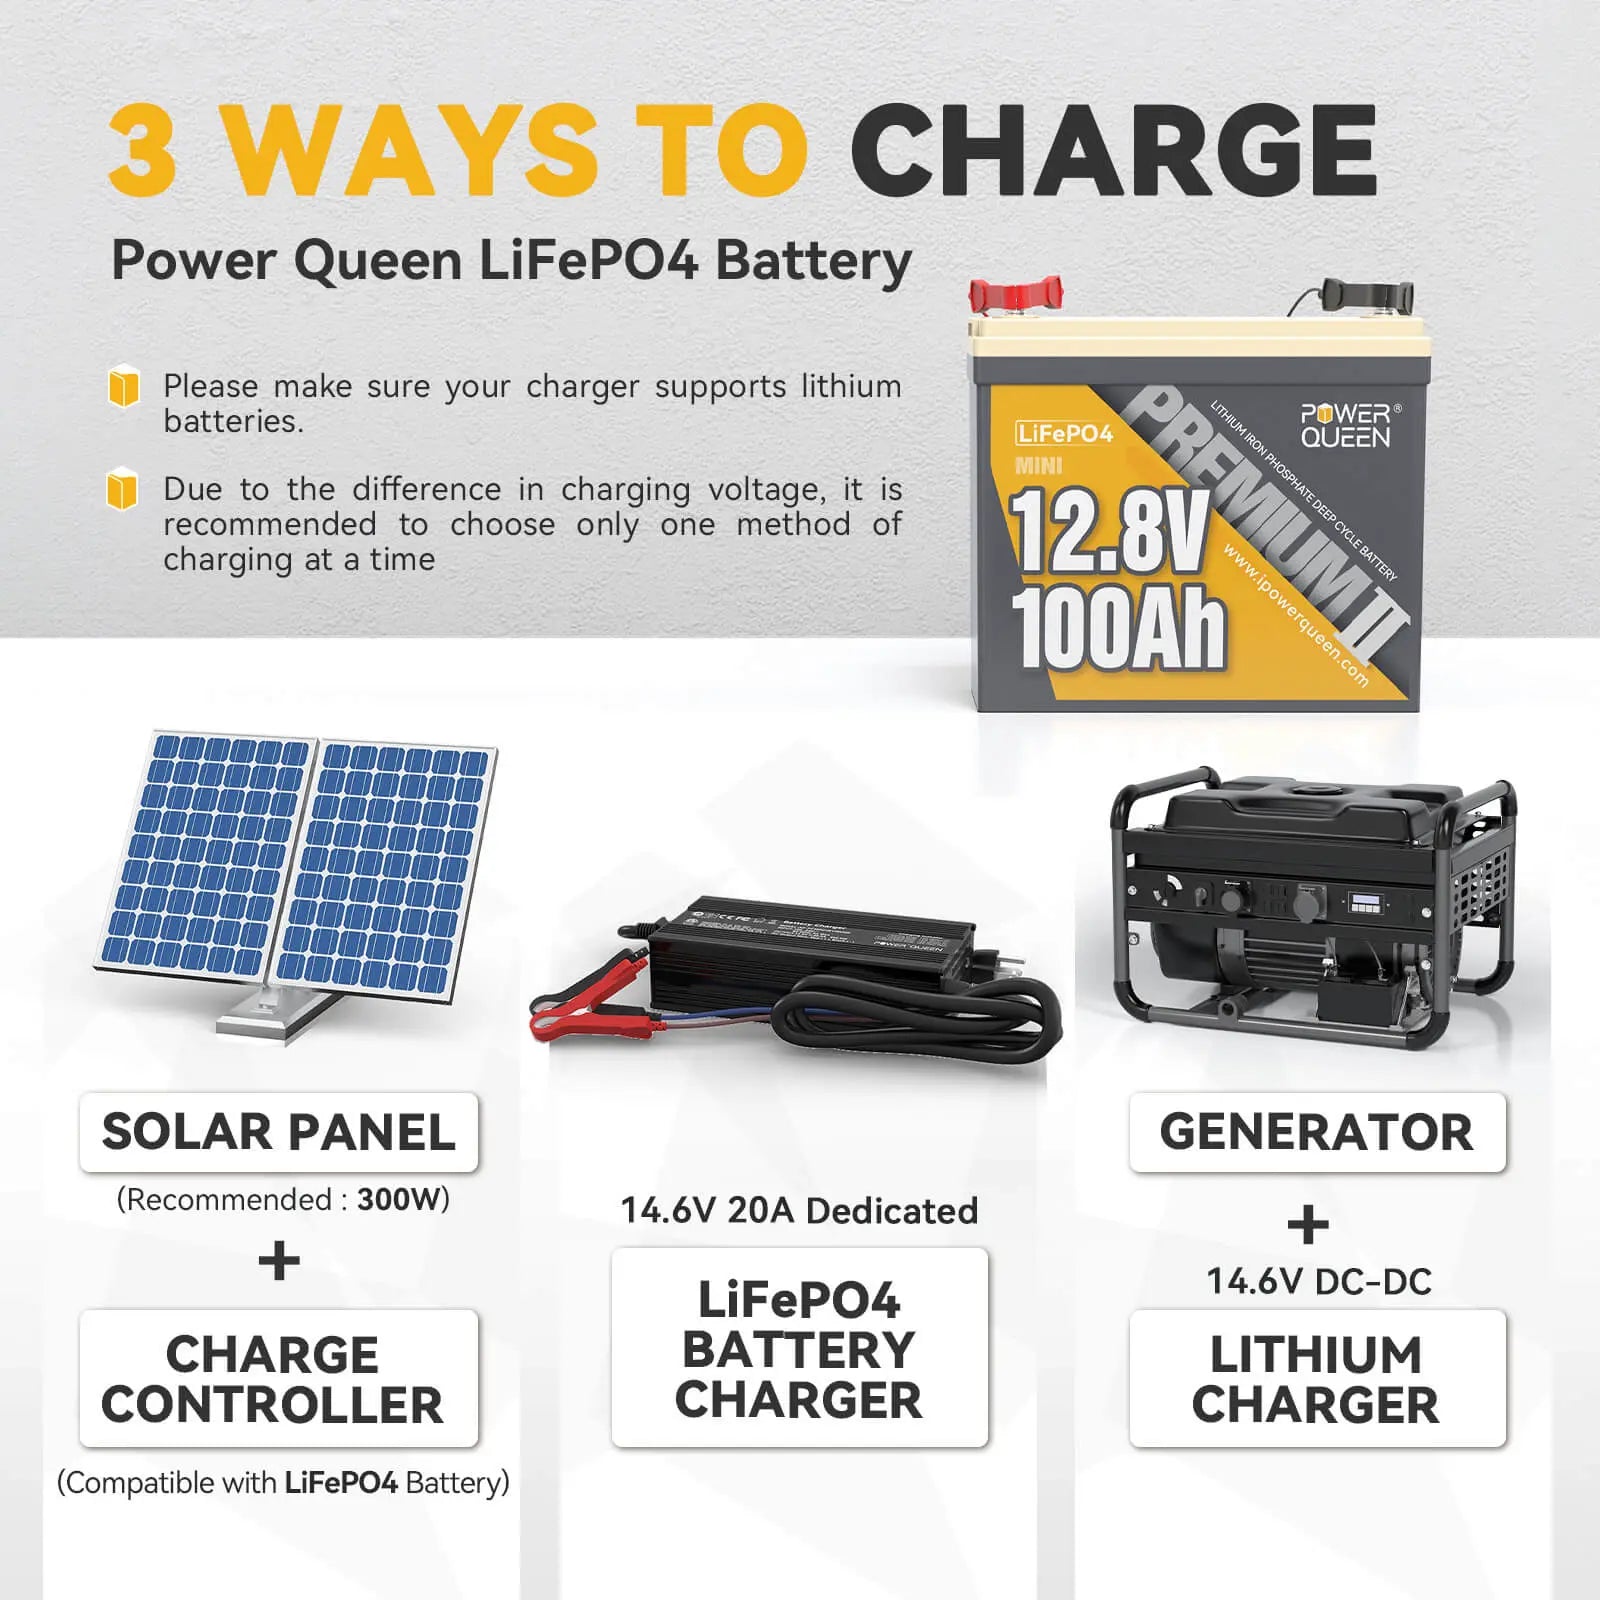 Power Queen 12.8V 100Ah Mini LiFePO4 Battery, Built-in 100A BMS